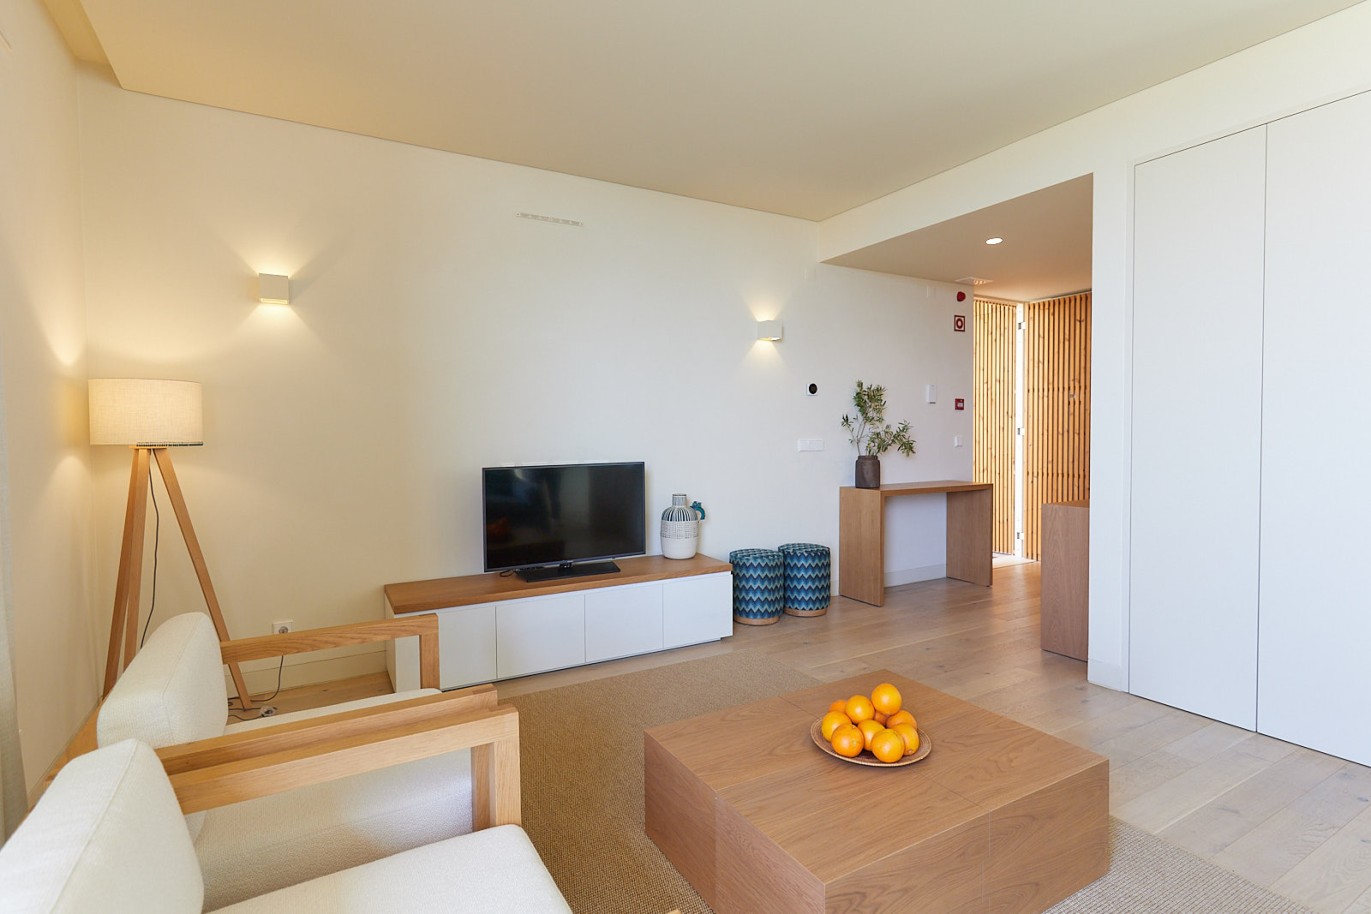 2 bedroom apartment in resort, for sale in Porches, Algarve_228801